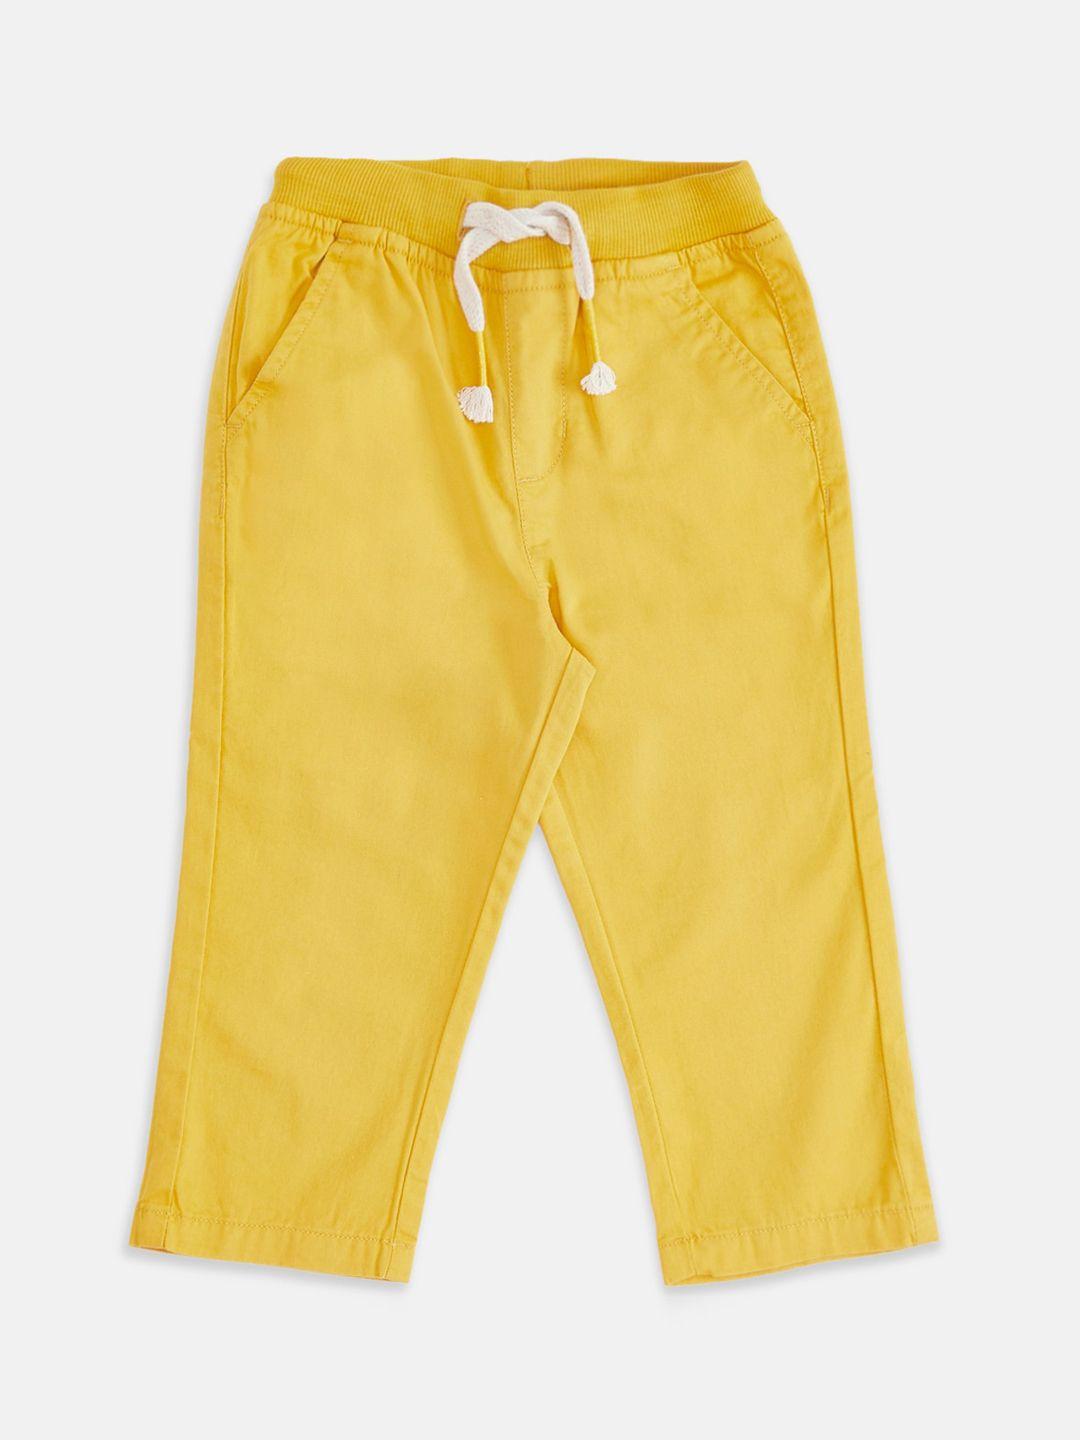 pantaloons baby boys yellow cotton trousers